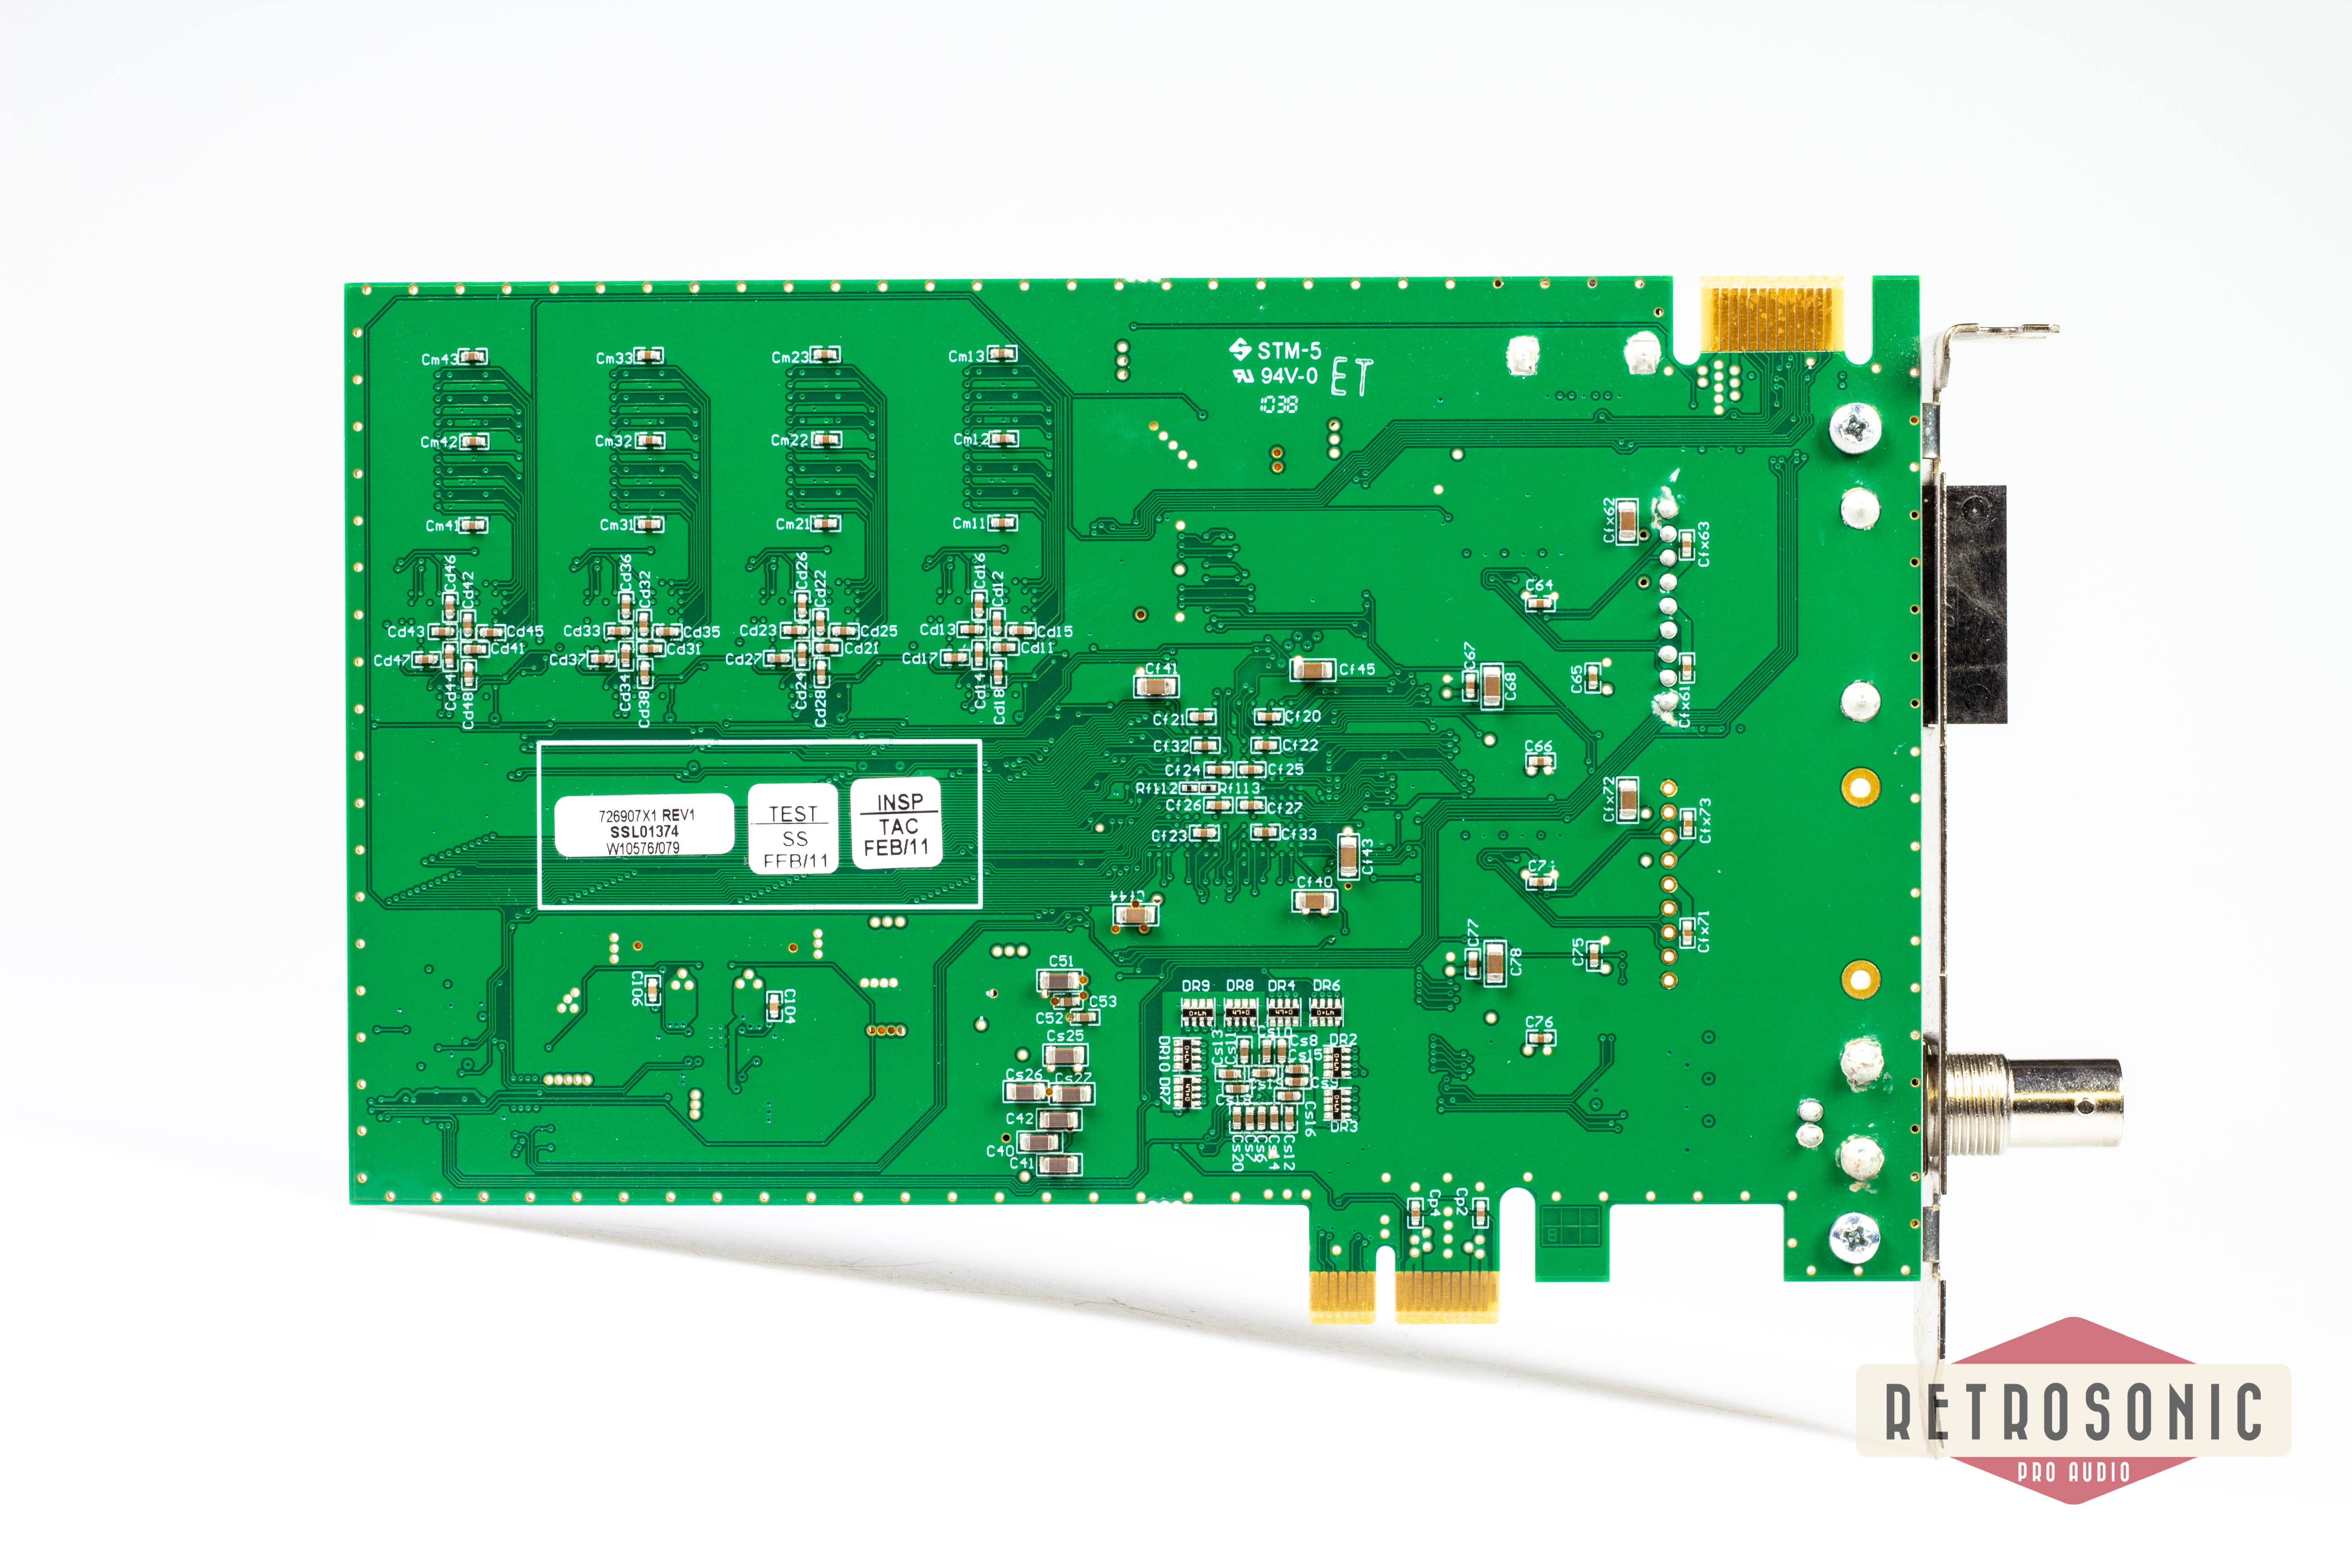 SSL MadiXtreme 64-channel PCIe-MADI card